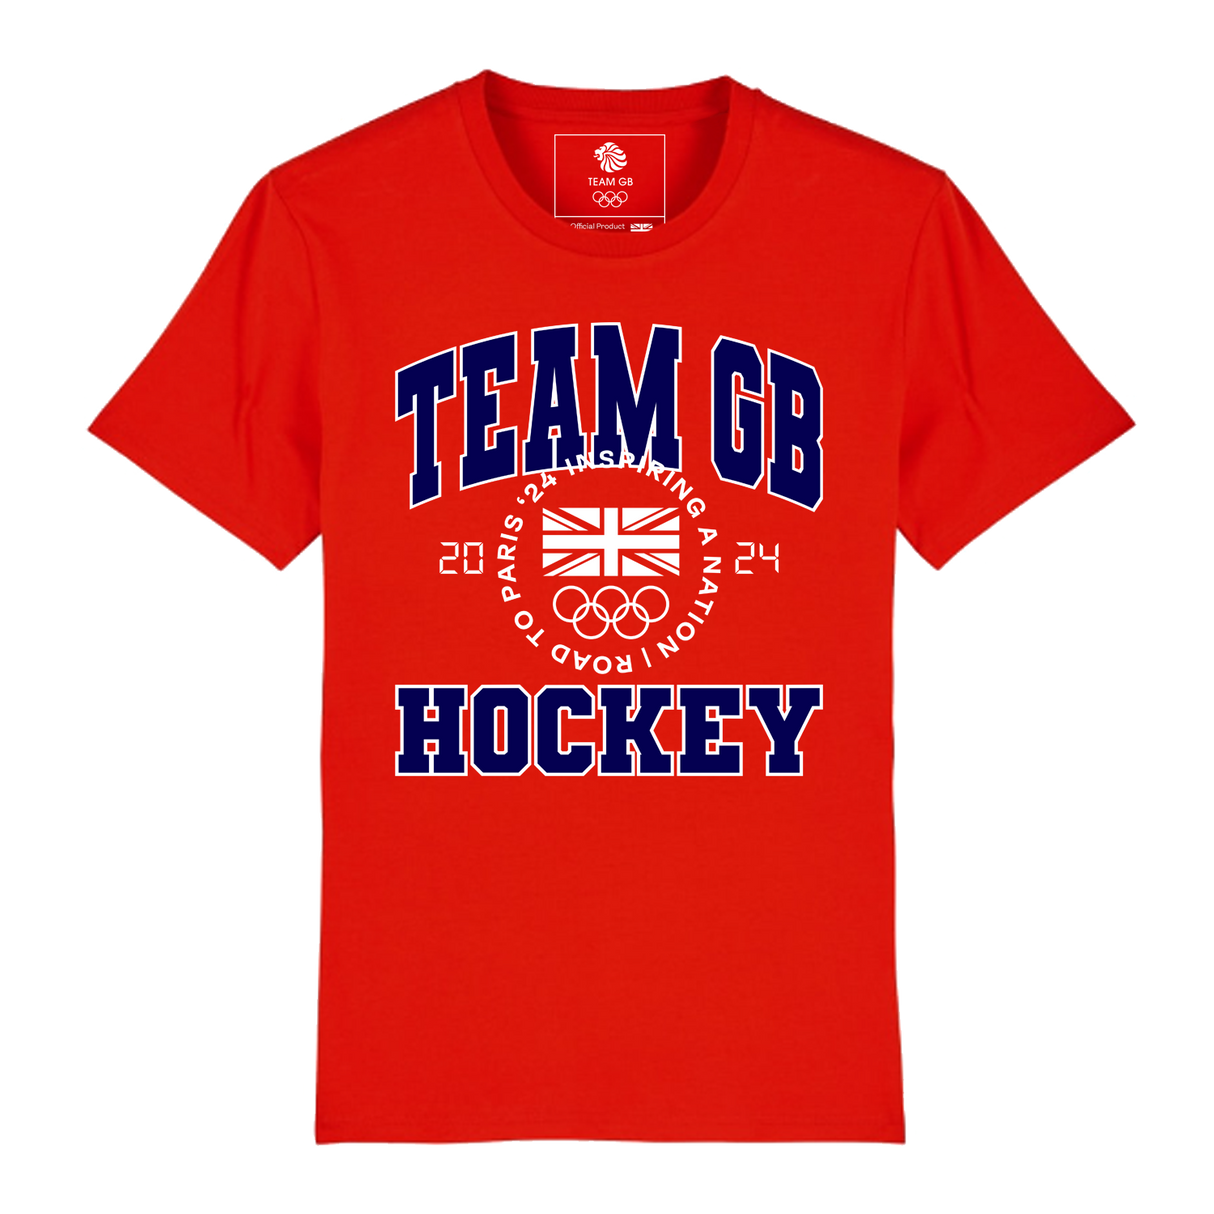 Team GB Varsity Hockey Bright Red T-Shirt